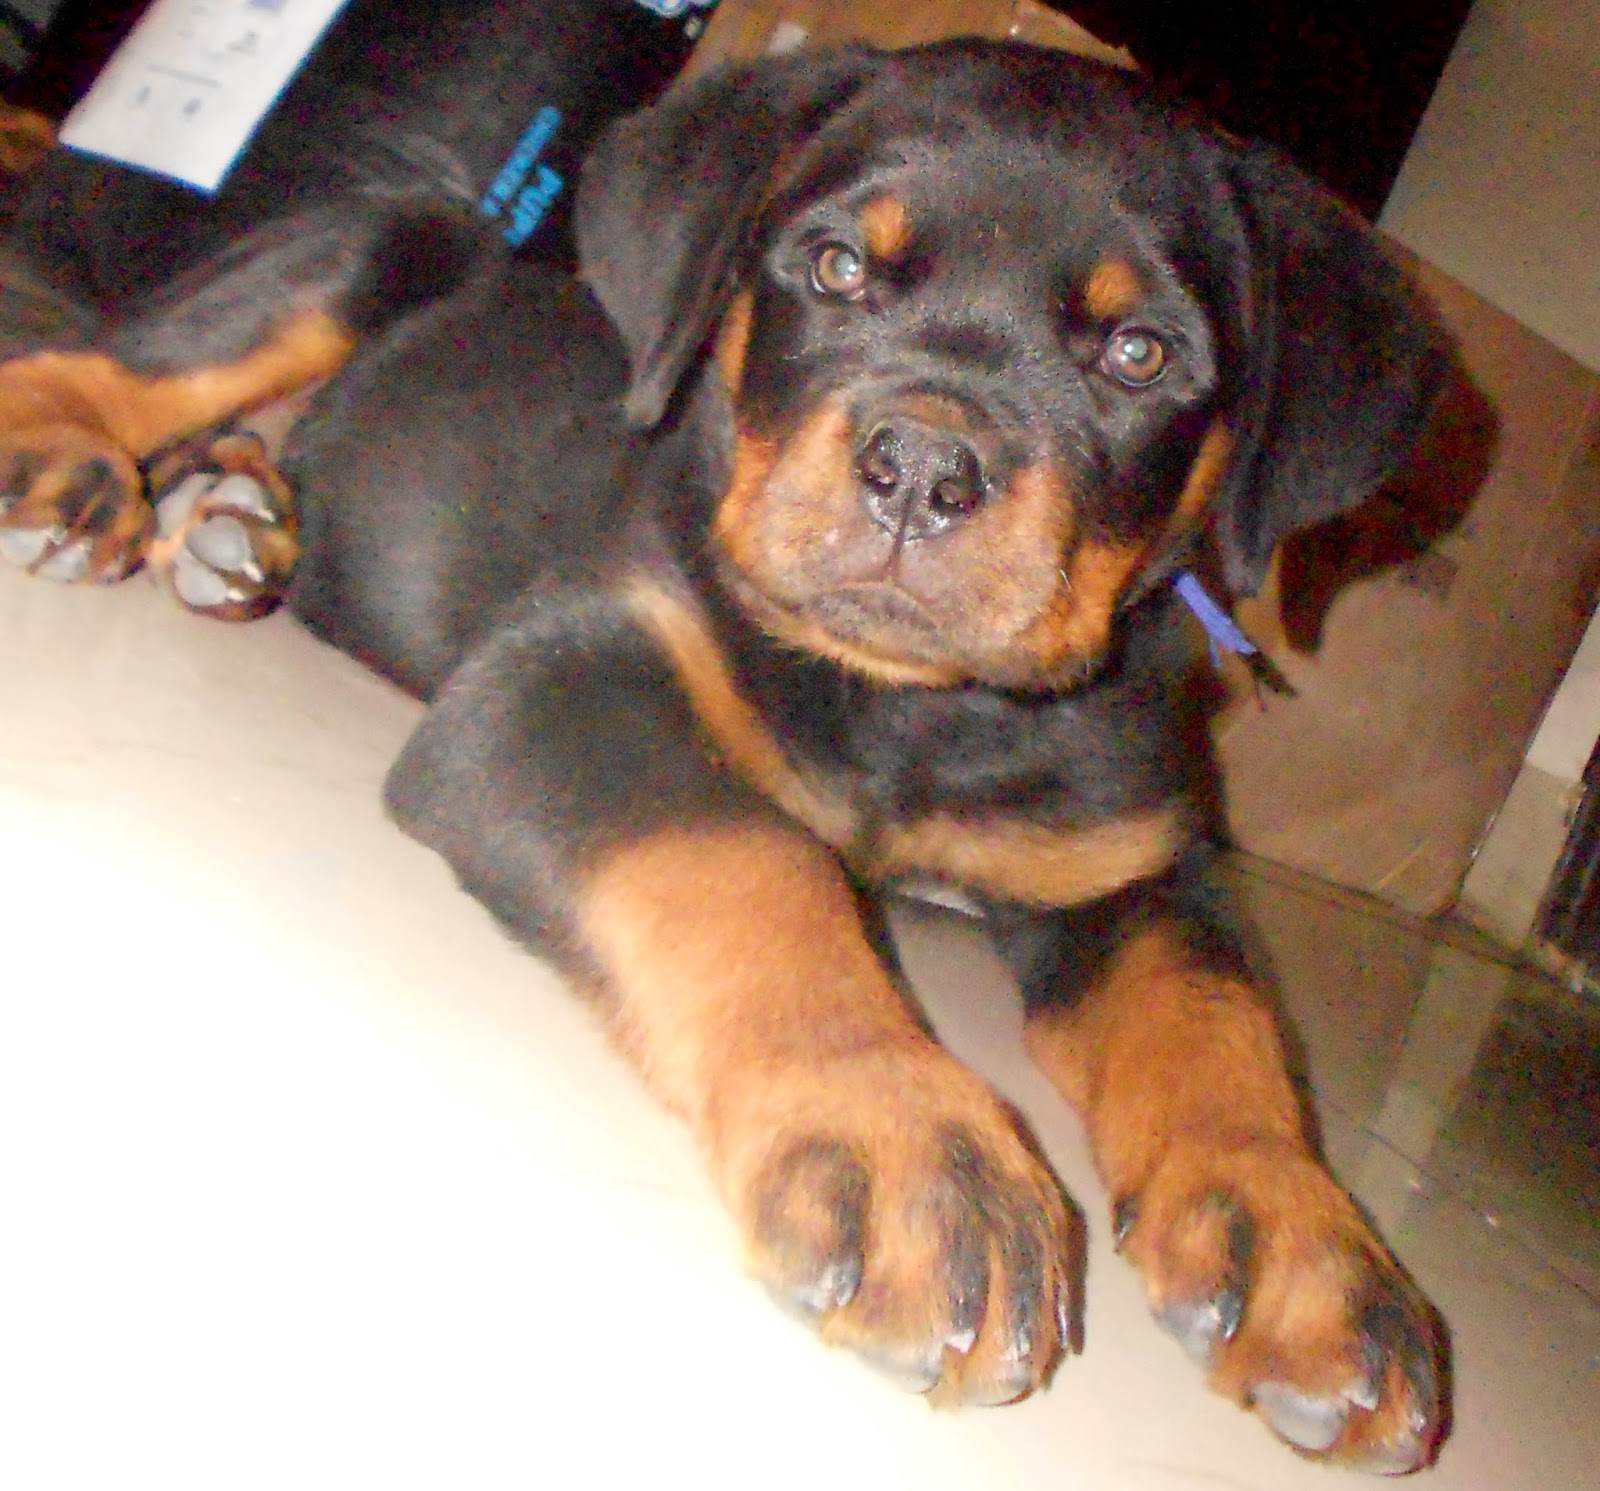 Leo - The Rottweiler: 11 Week Old Rottweiler Puppy